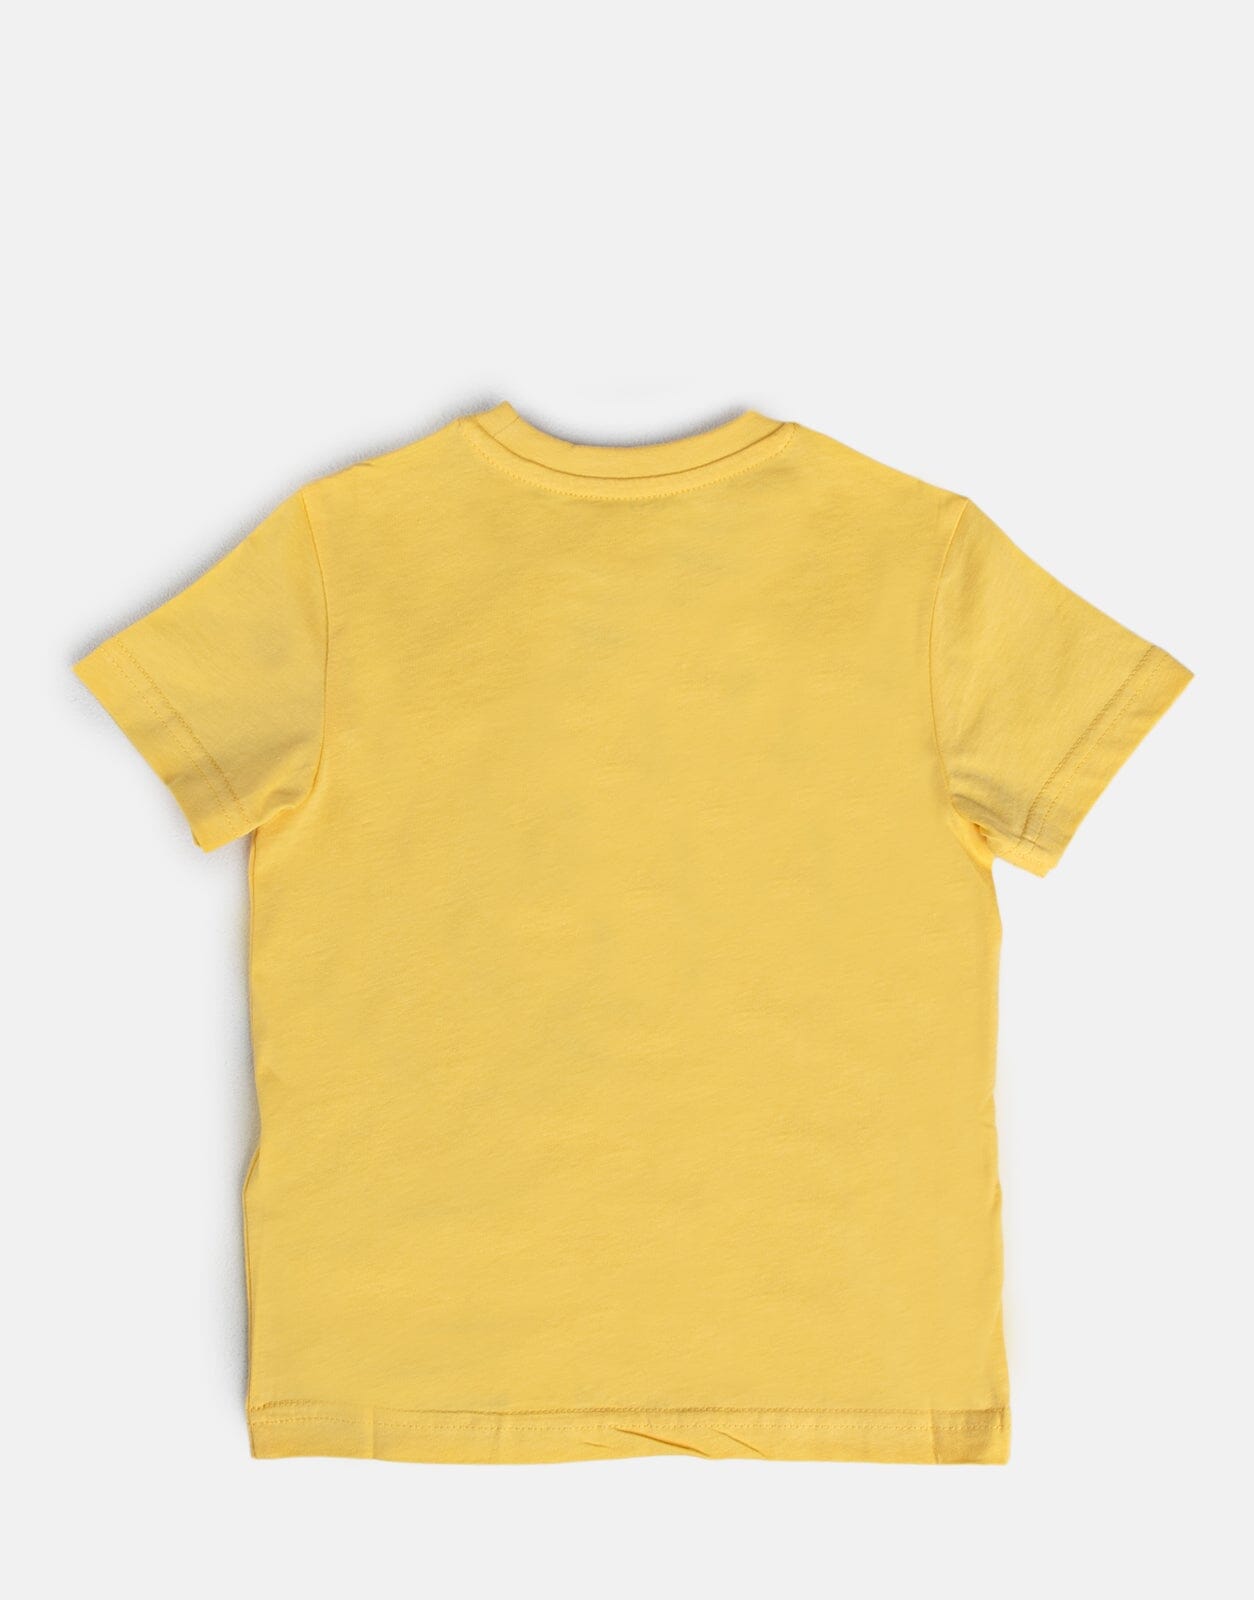 Polo Boys Corey Crest T-Shirt - Subwear